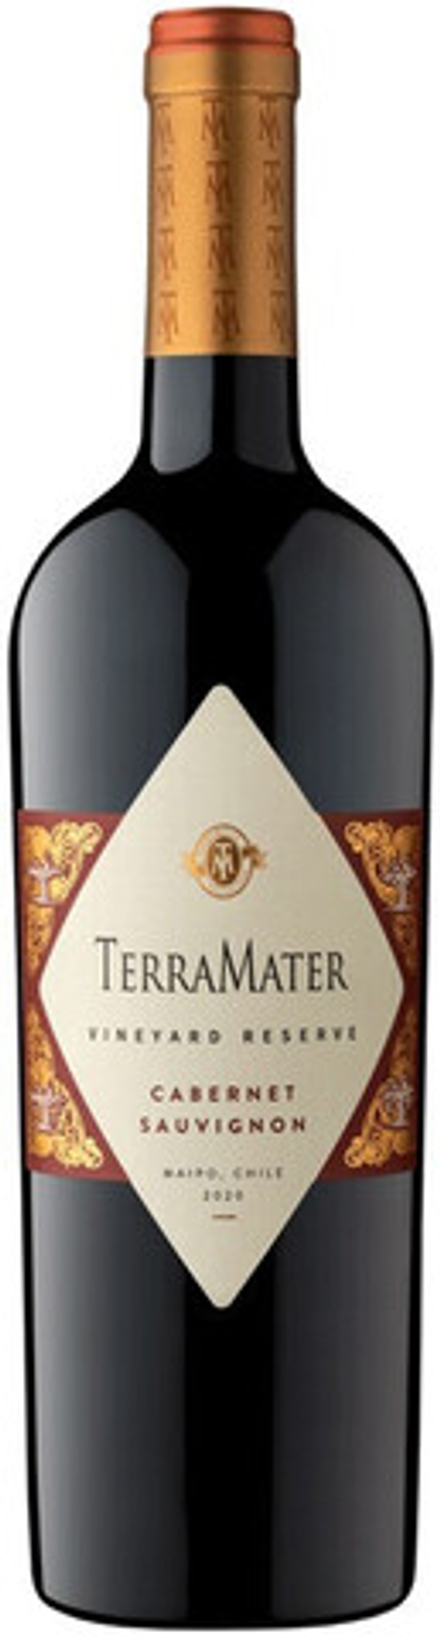 Вино TerraMater Vineyard Reserve Cabernet Sauvignon, 0,75